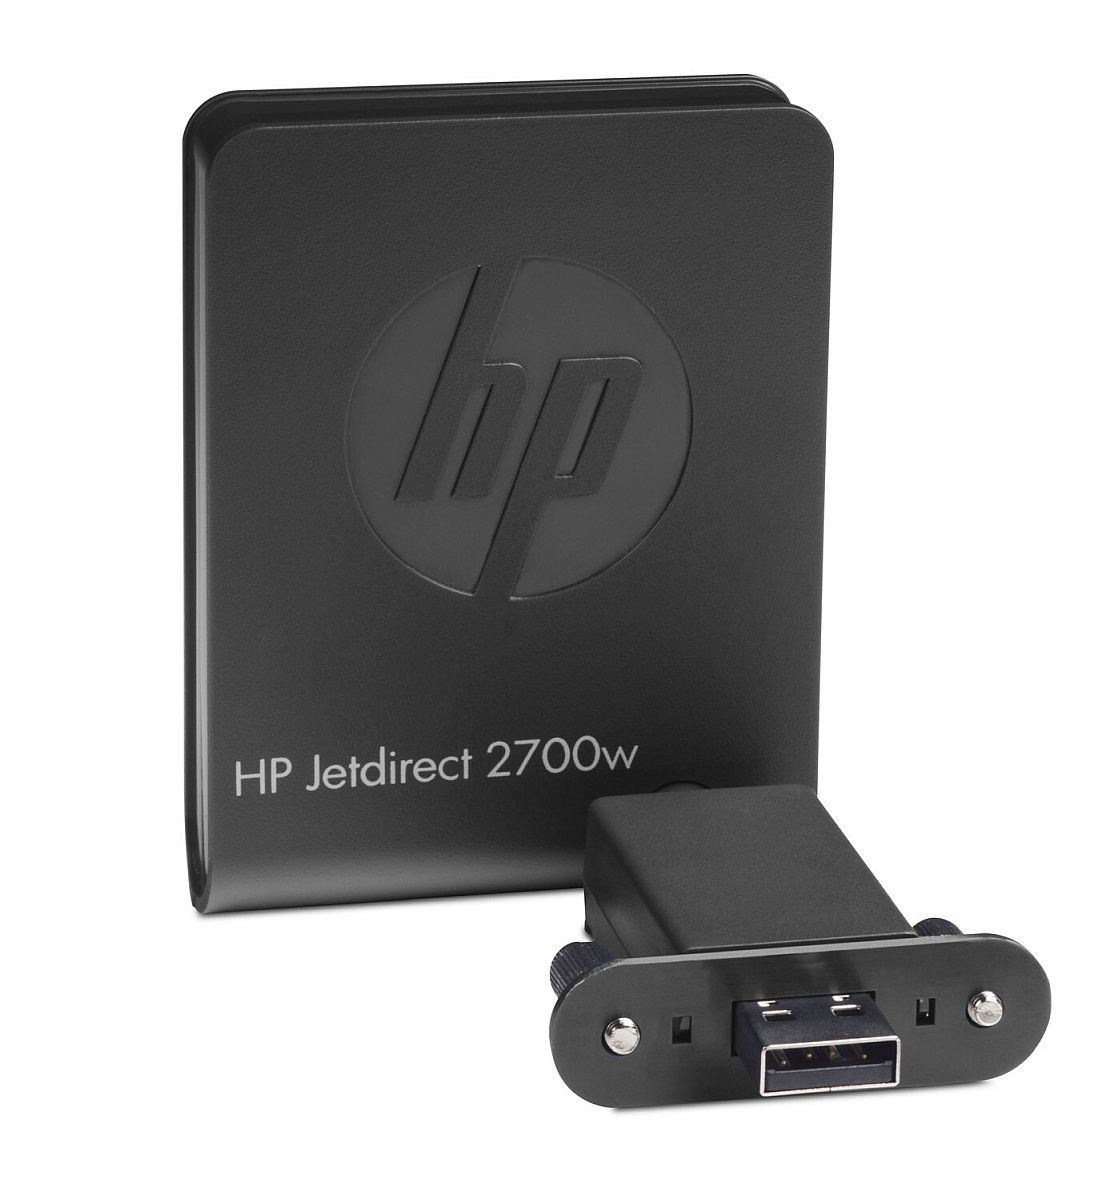 Bezdrátový tiskový server HP Jetdirect 2700w USB (J8026A)